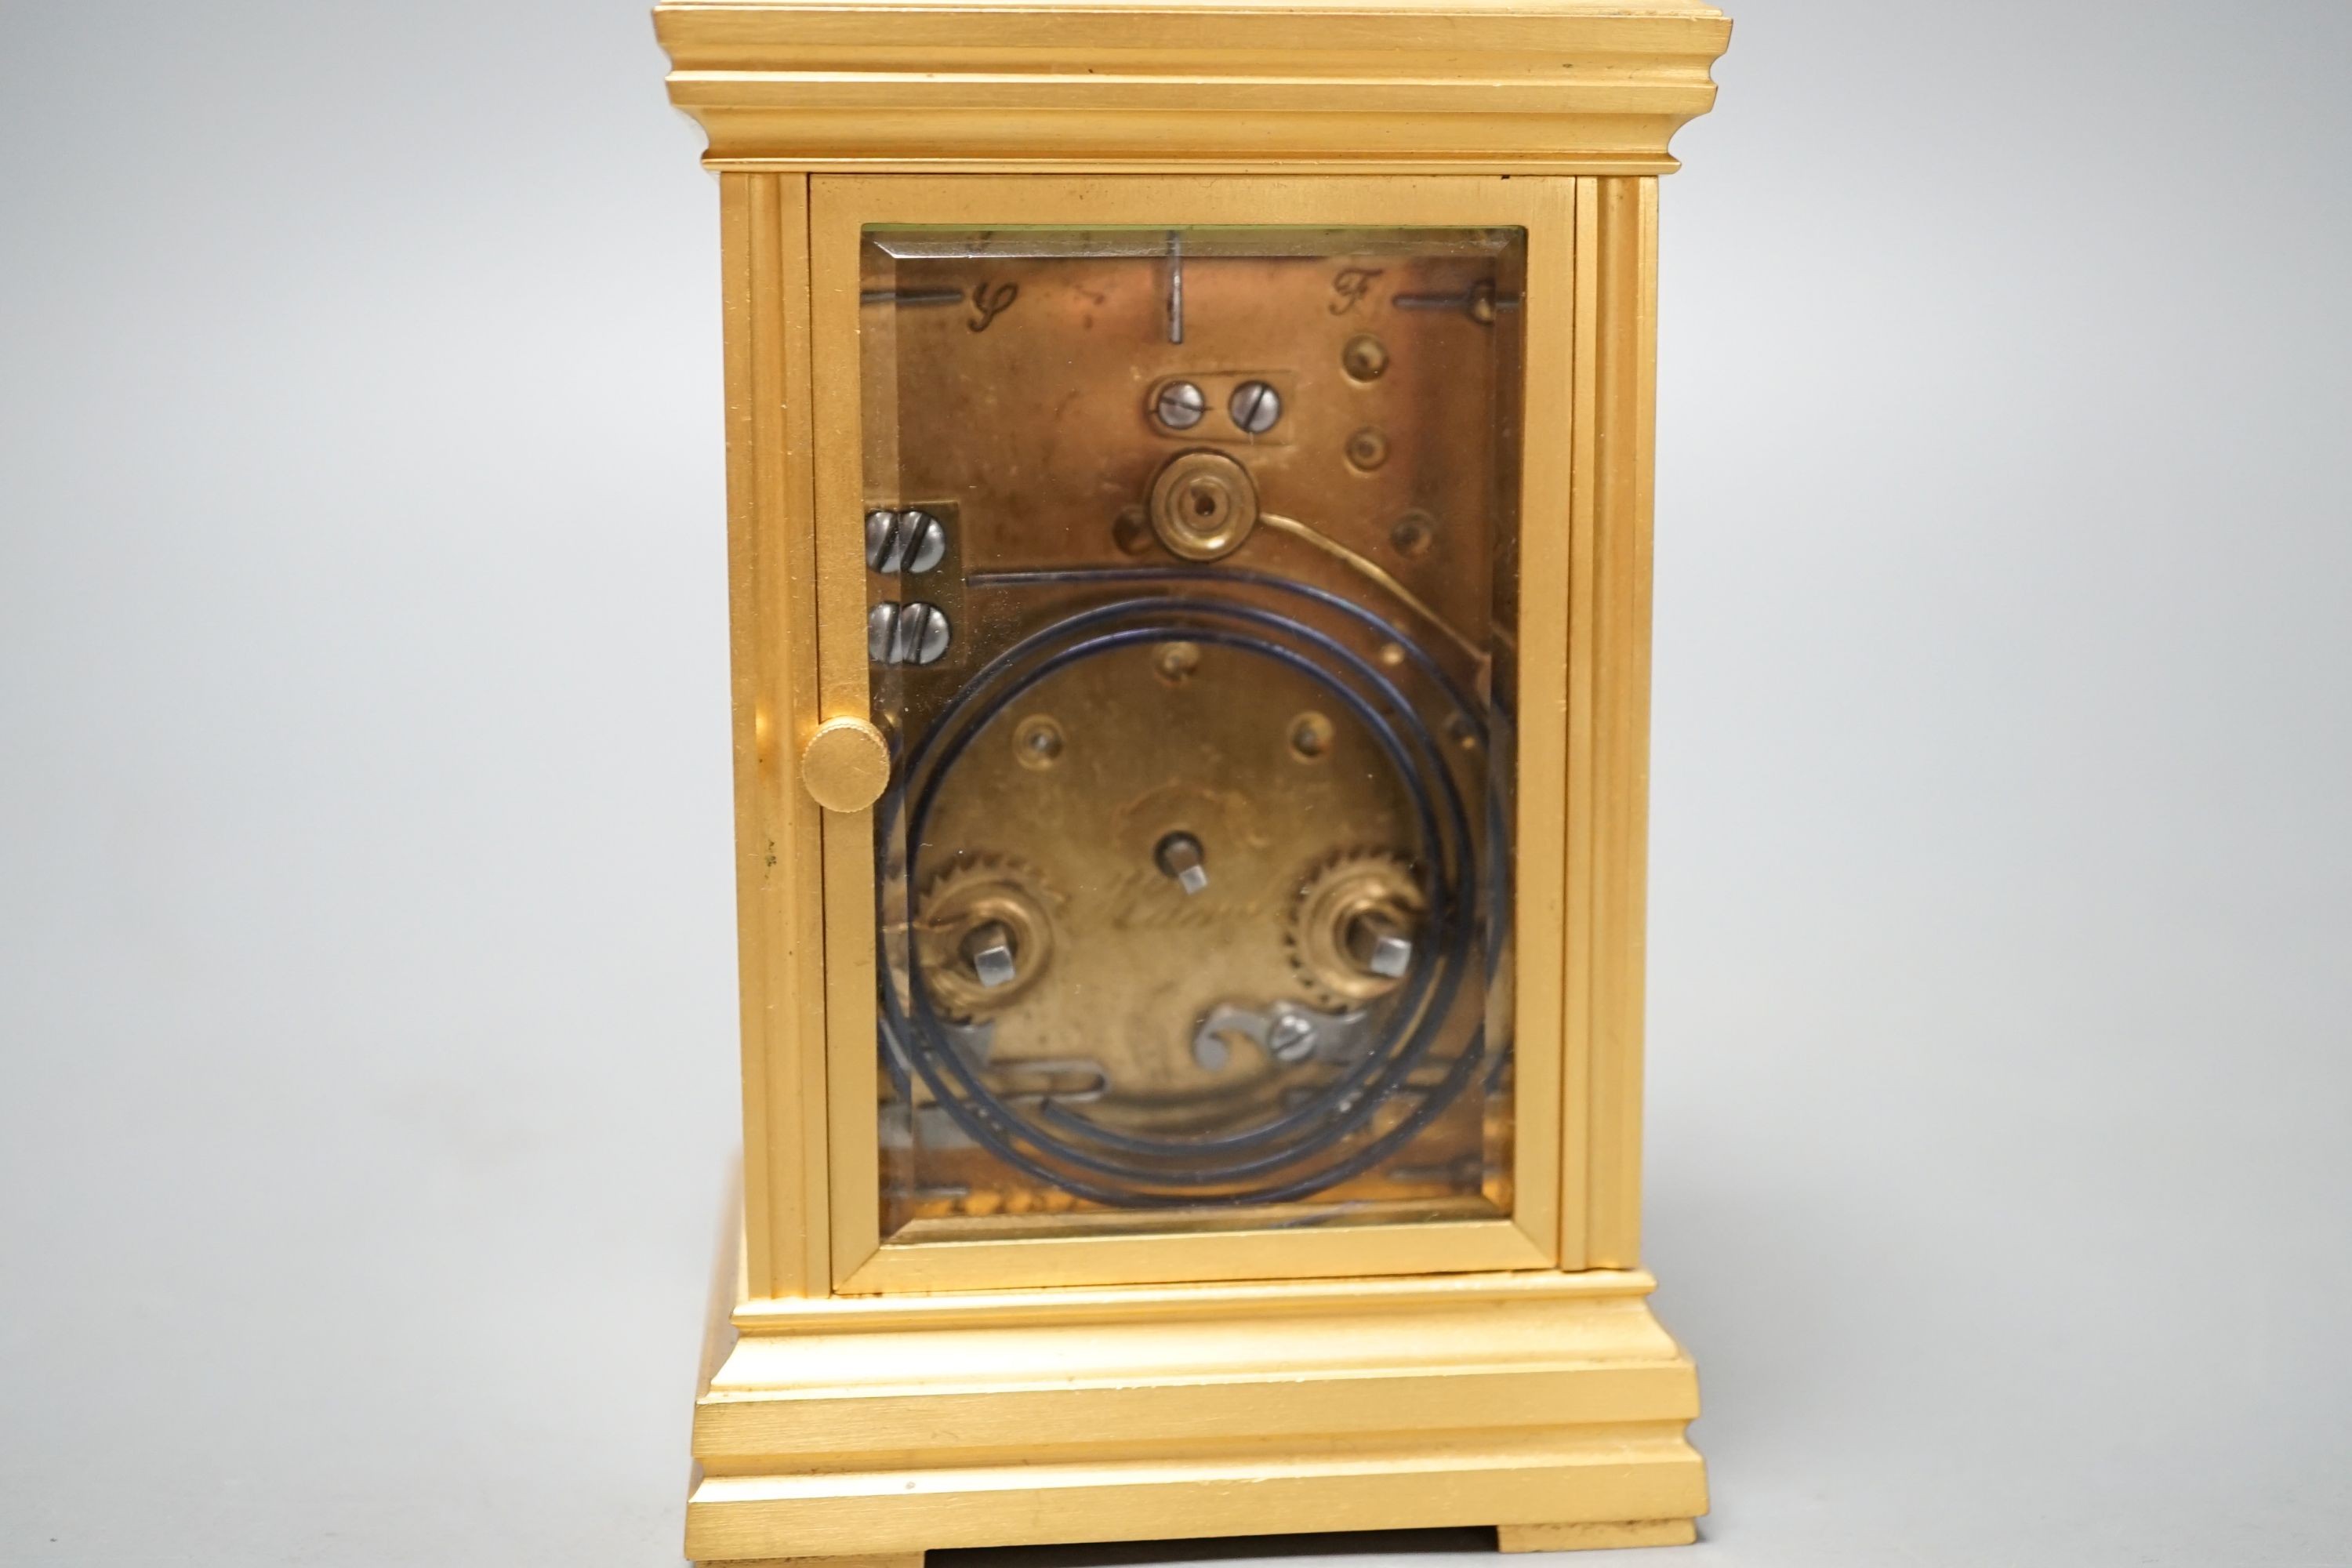 A French gilt brass carriage clock, 13cm high